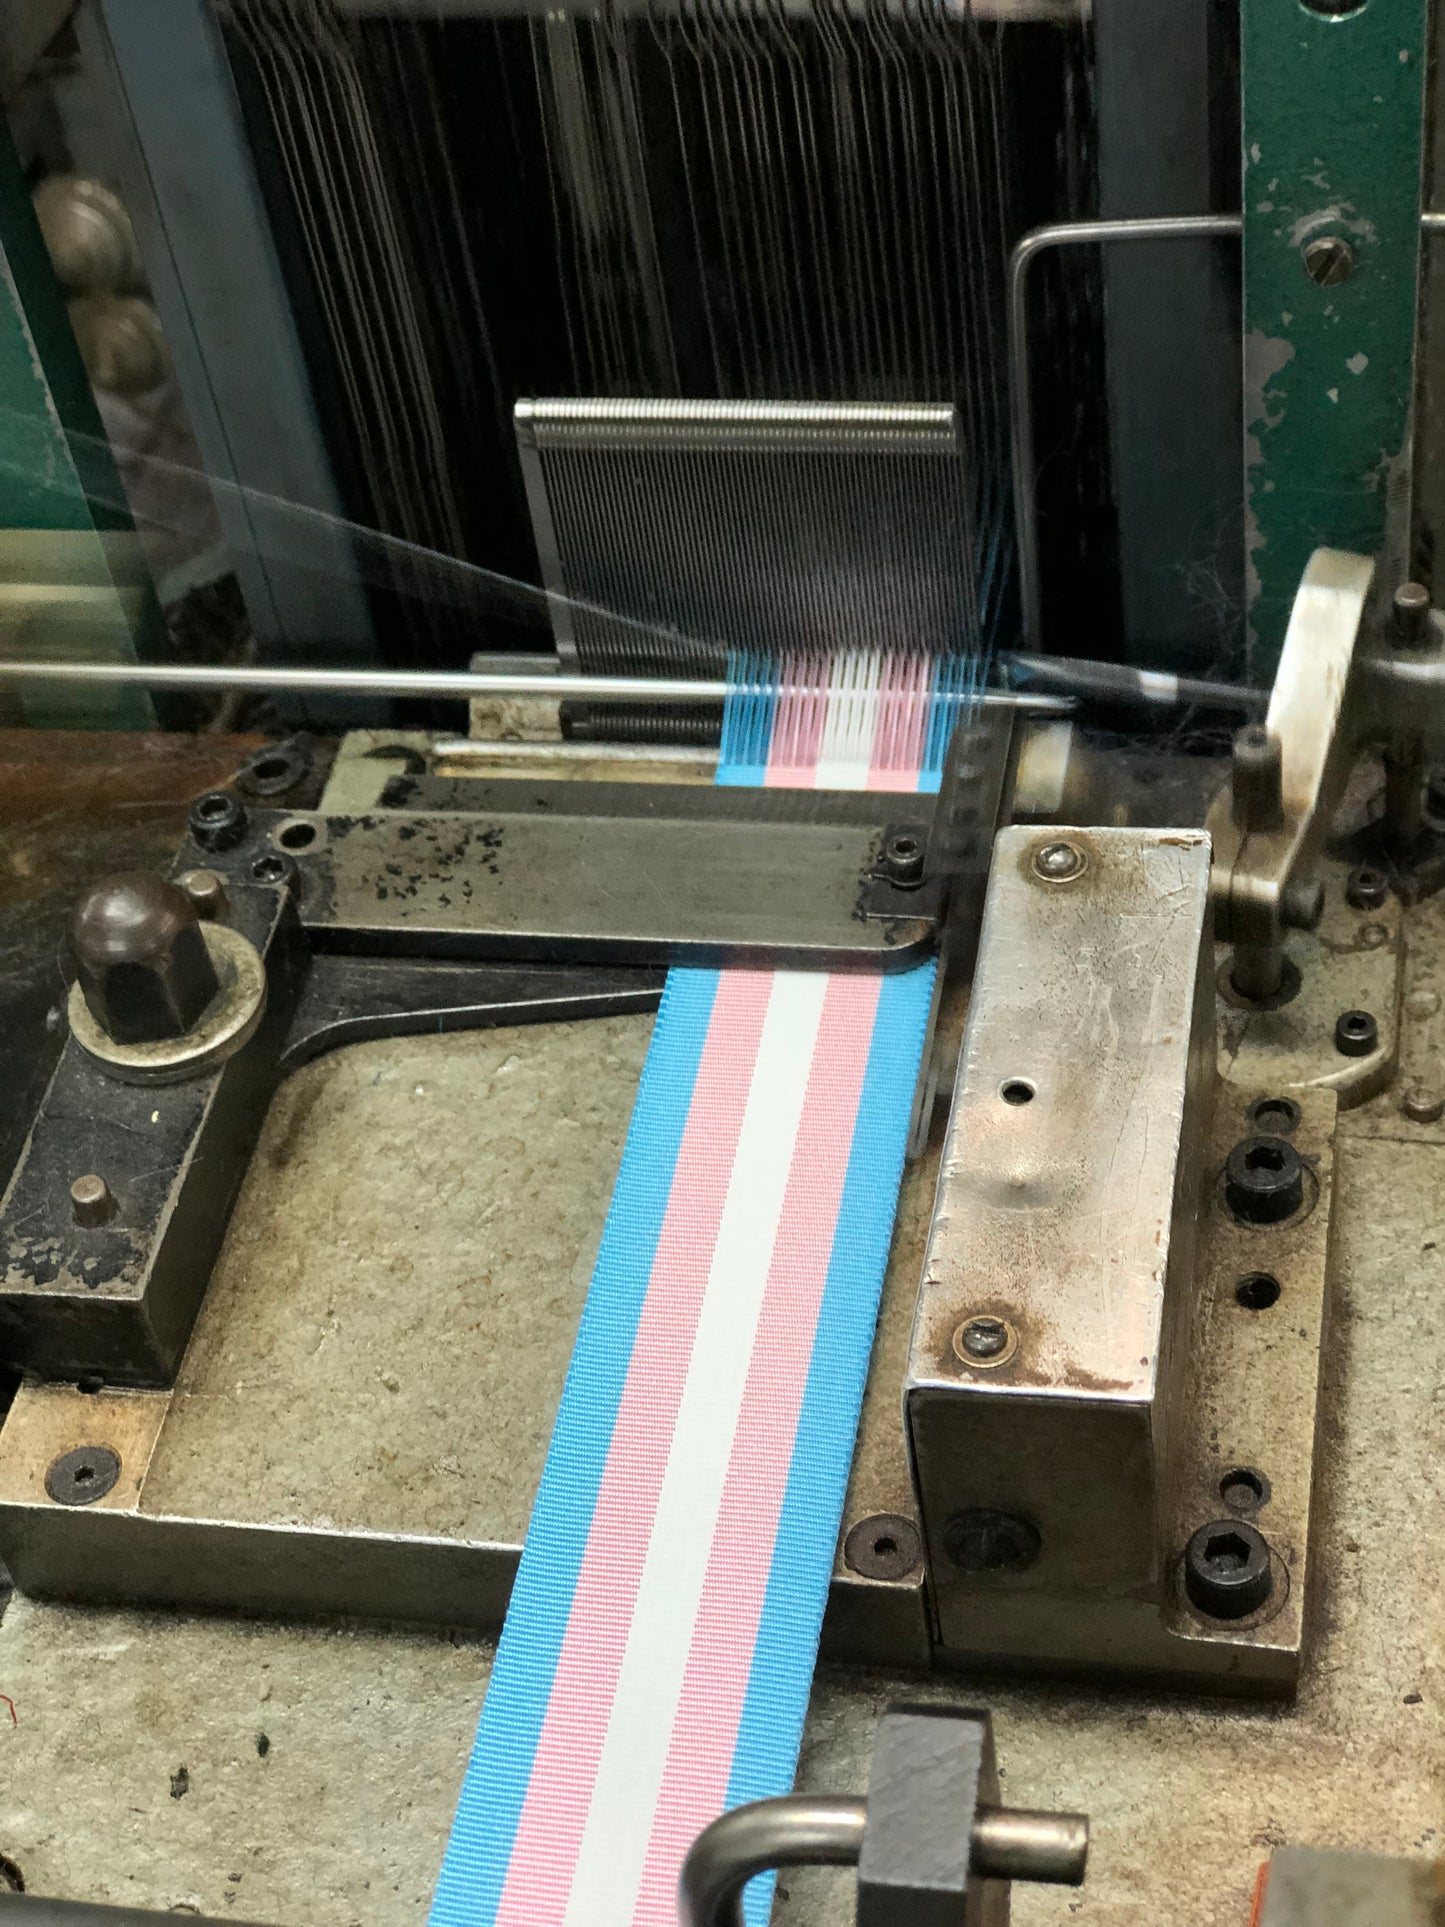 "Transgender Pride" 1" Grosgrain Ribbon